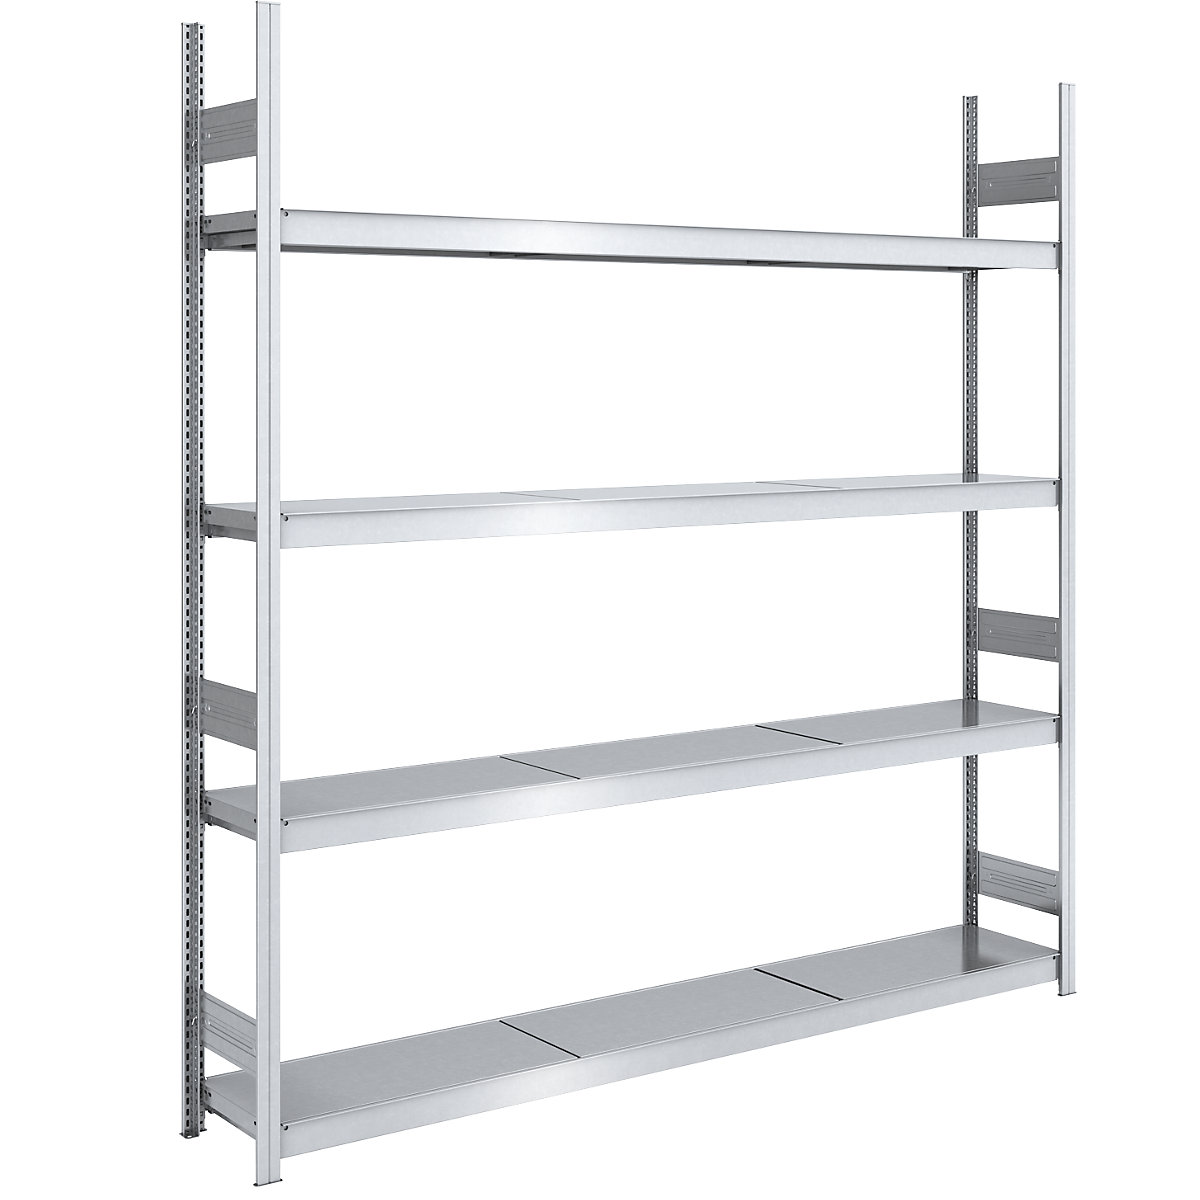 Wide span boltless shelving unit, zinc plated – hofe, shelf WxD 2250 x 400 mm, standard shelf unit, 4 steel shelves, height 2500 mm